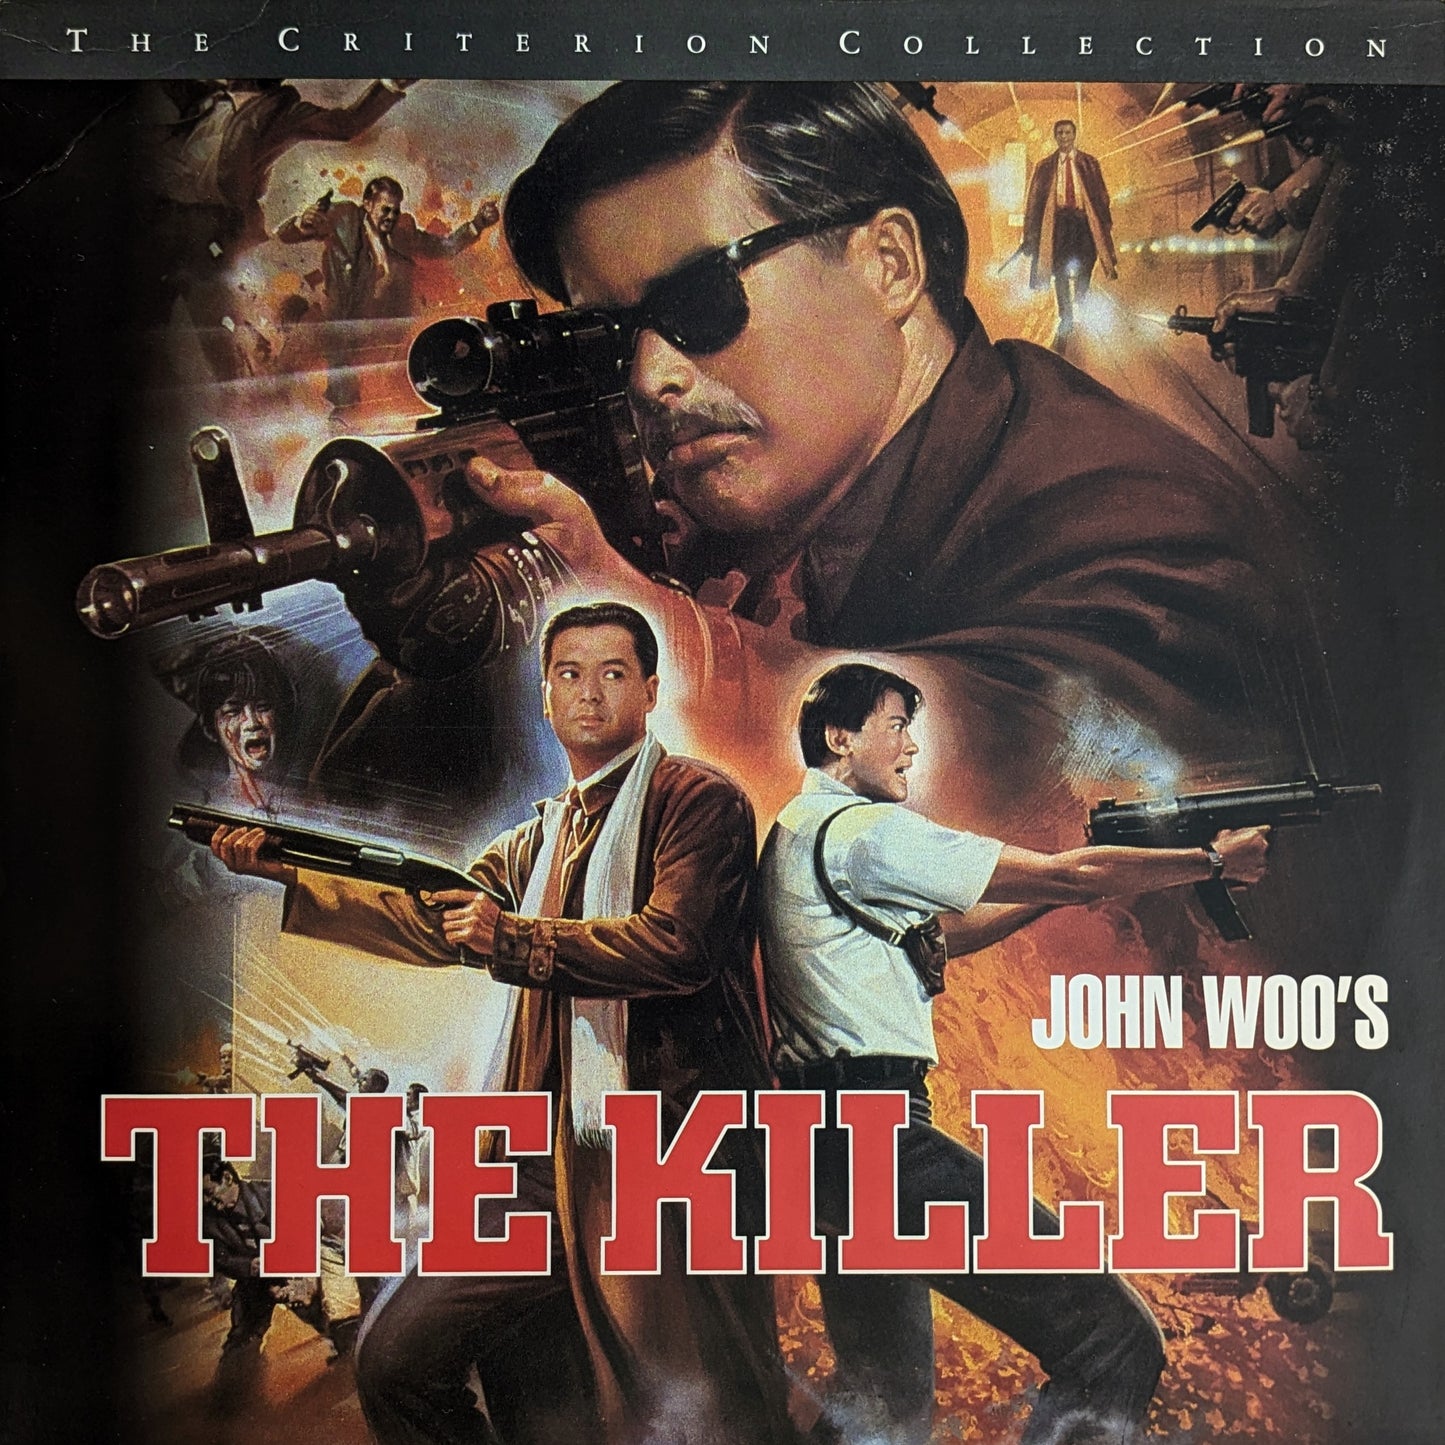 Killer, The (1989) North American Laserdisc